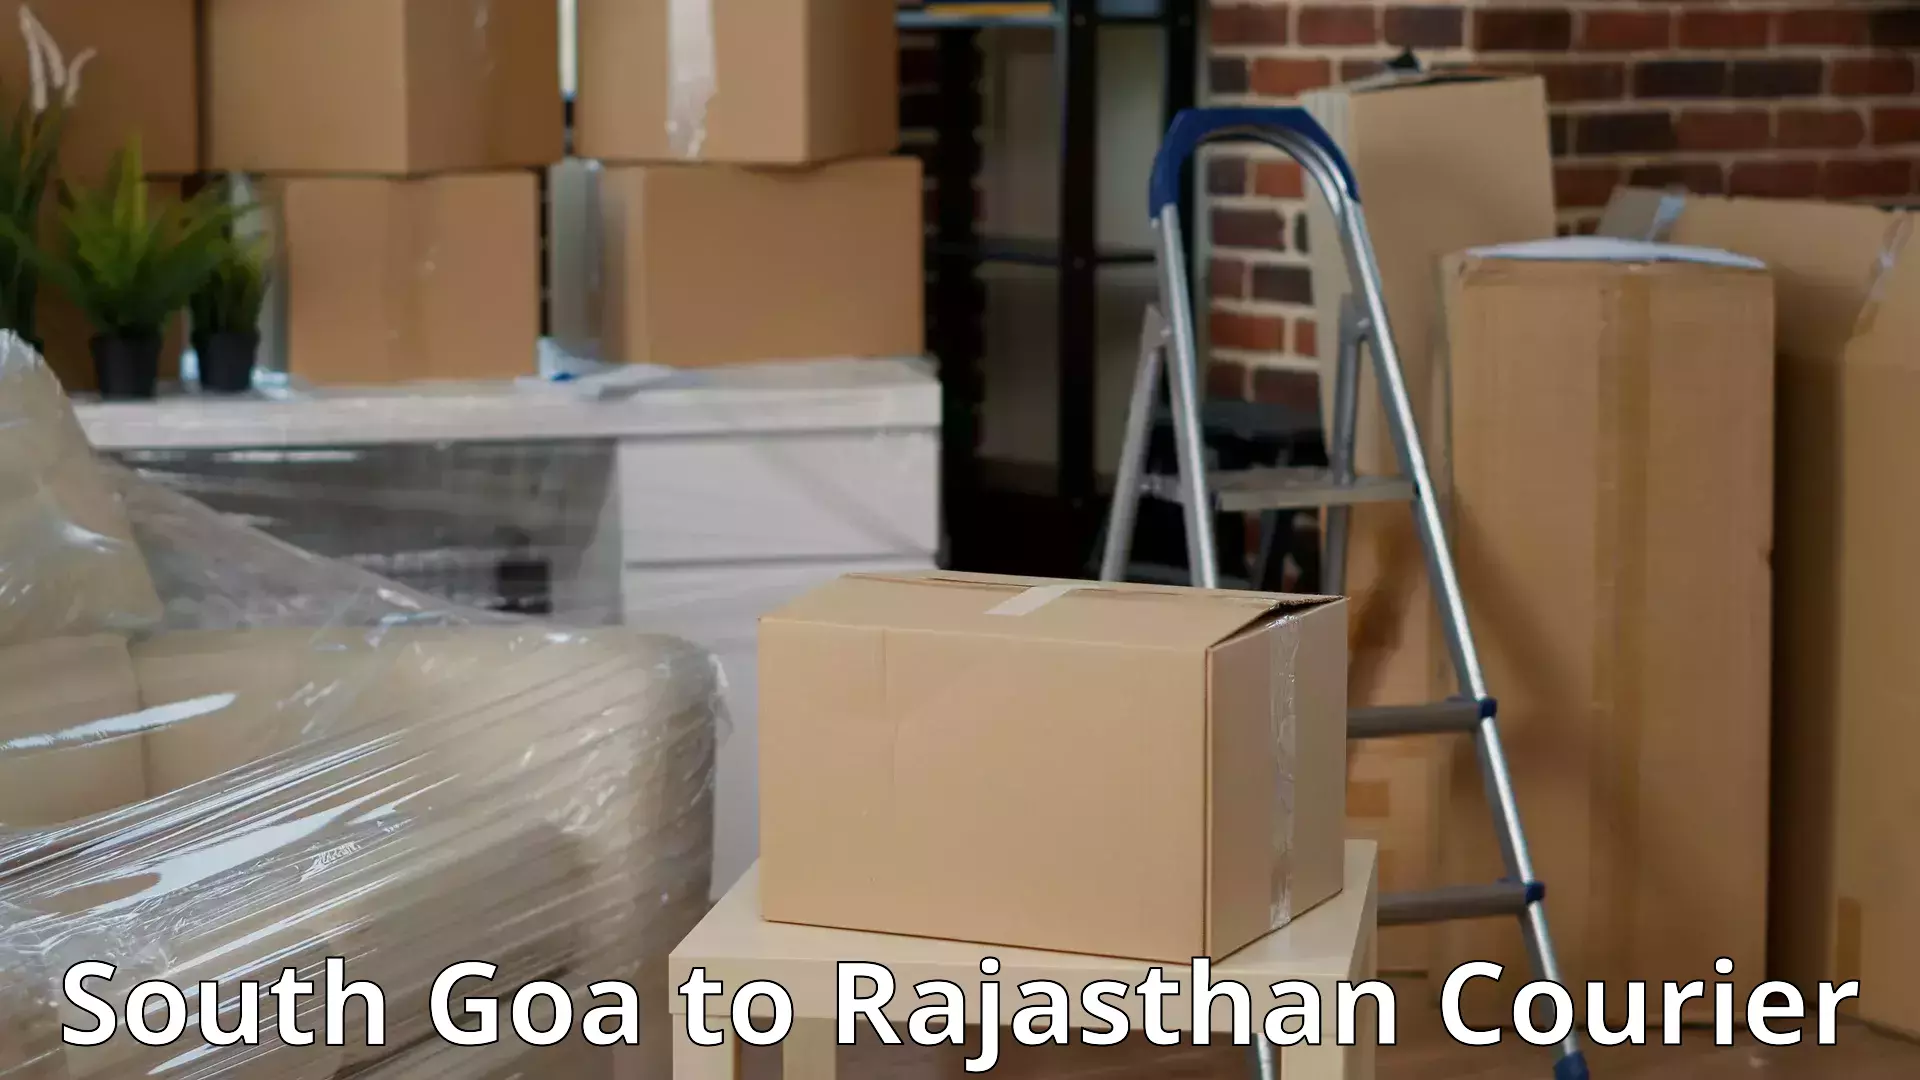 Professional moving company South Goa to Kota